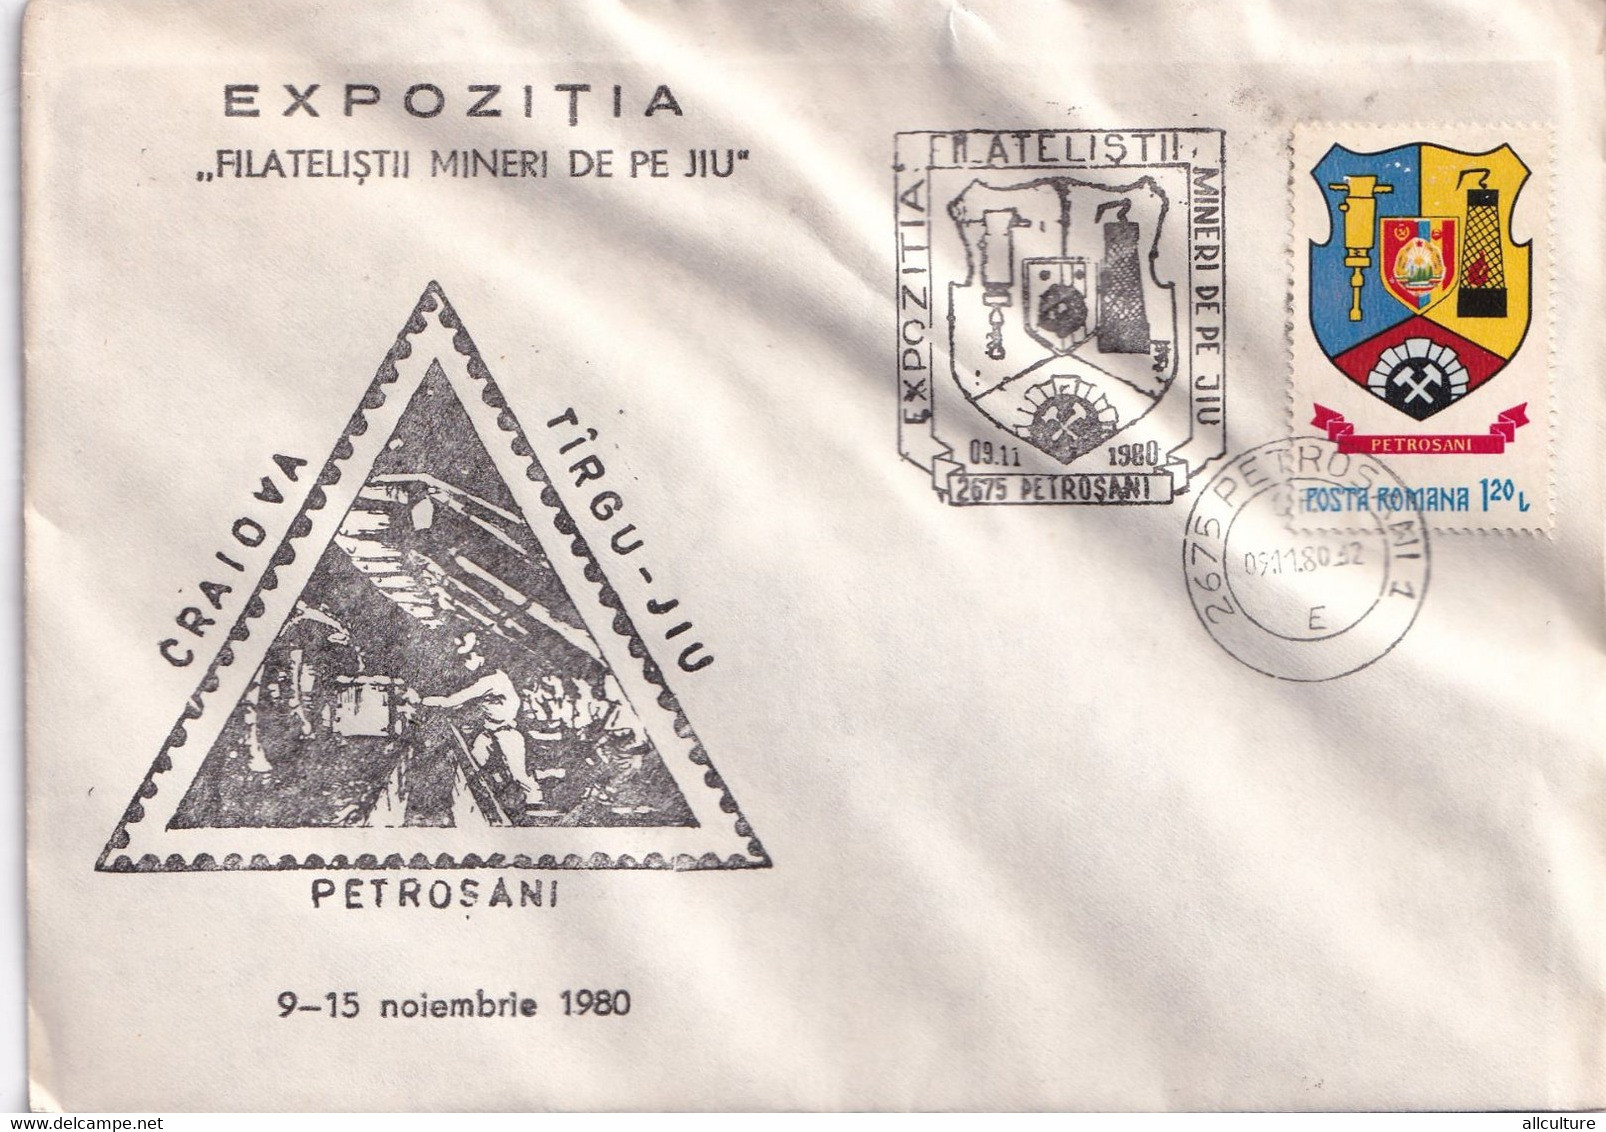 A2833 - Expozitia " Filatelistii Mineri De Pe Jiu" Targu Jiu, Craiova, Petrosani 1980 Romania - Storia Postale